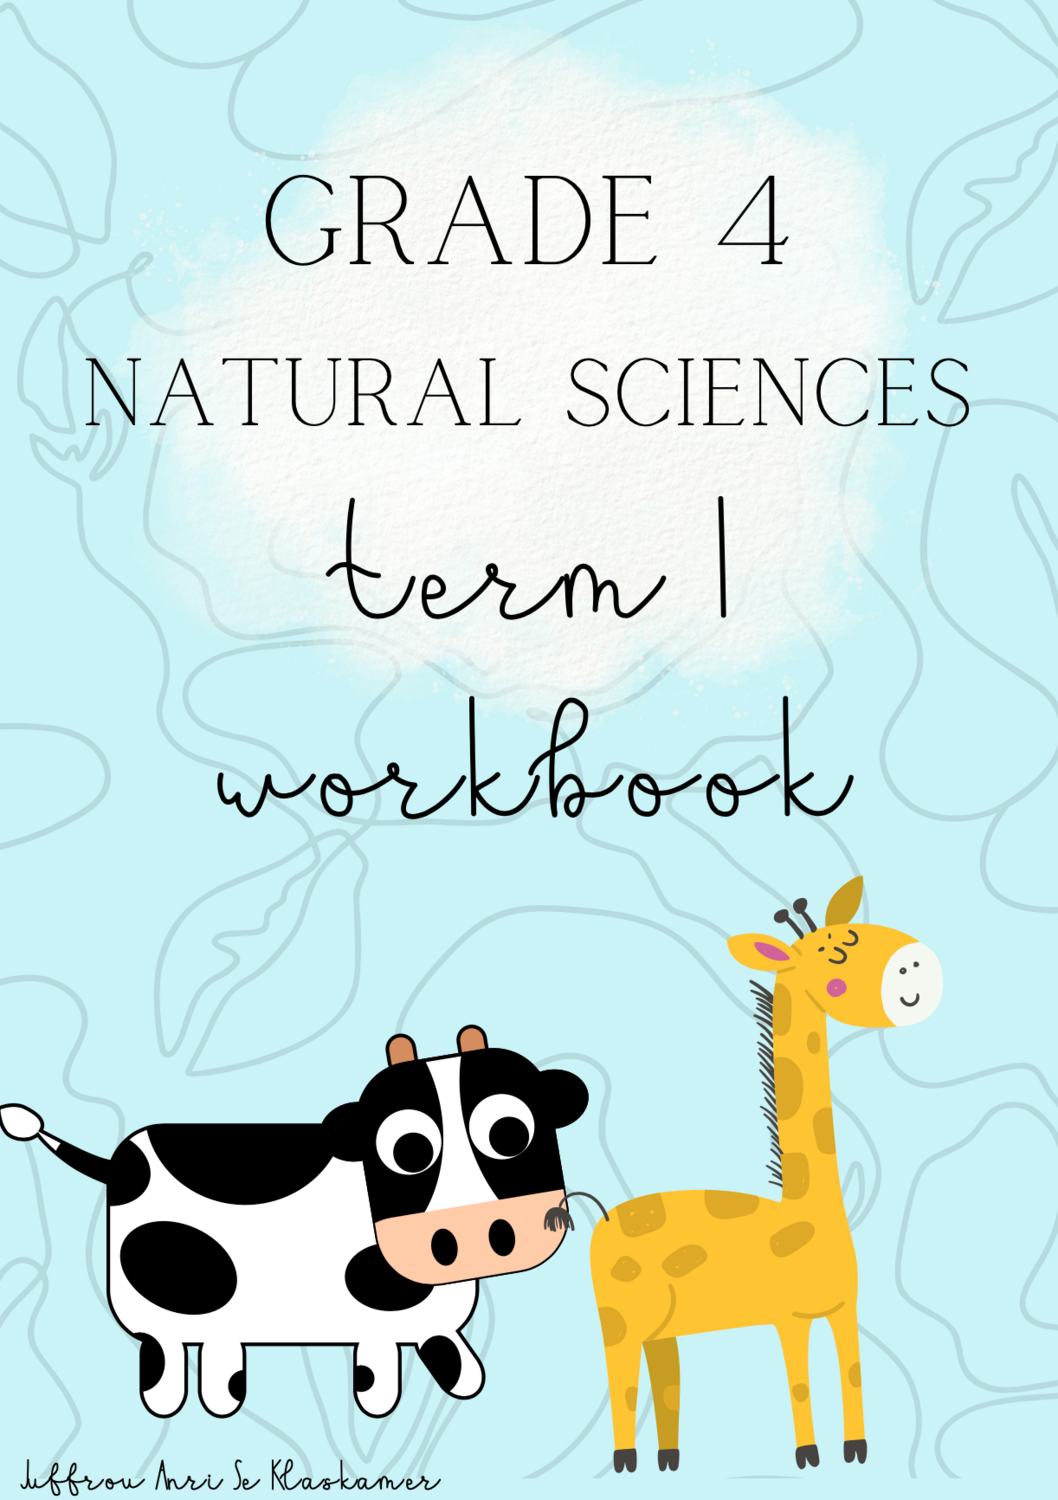 Grade 4 Natural Sciences term 1 workbook (2022)